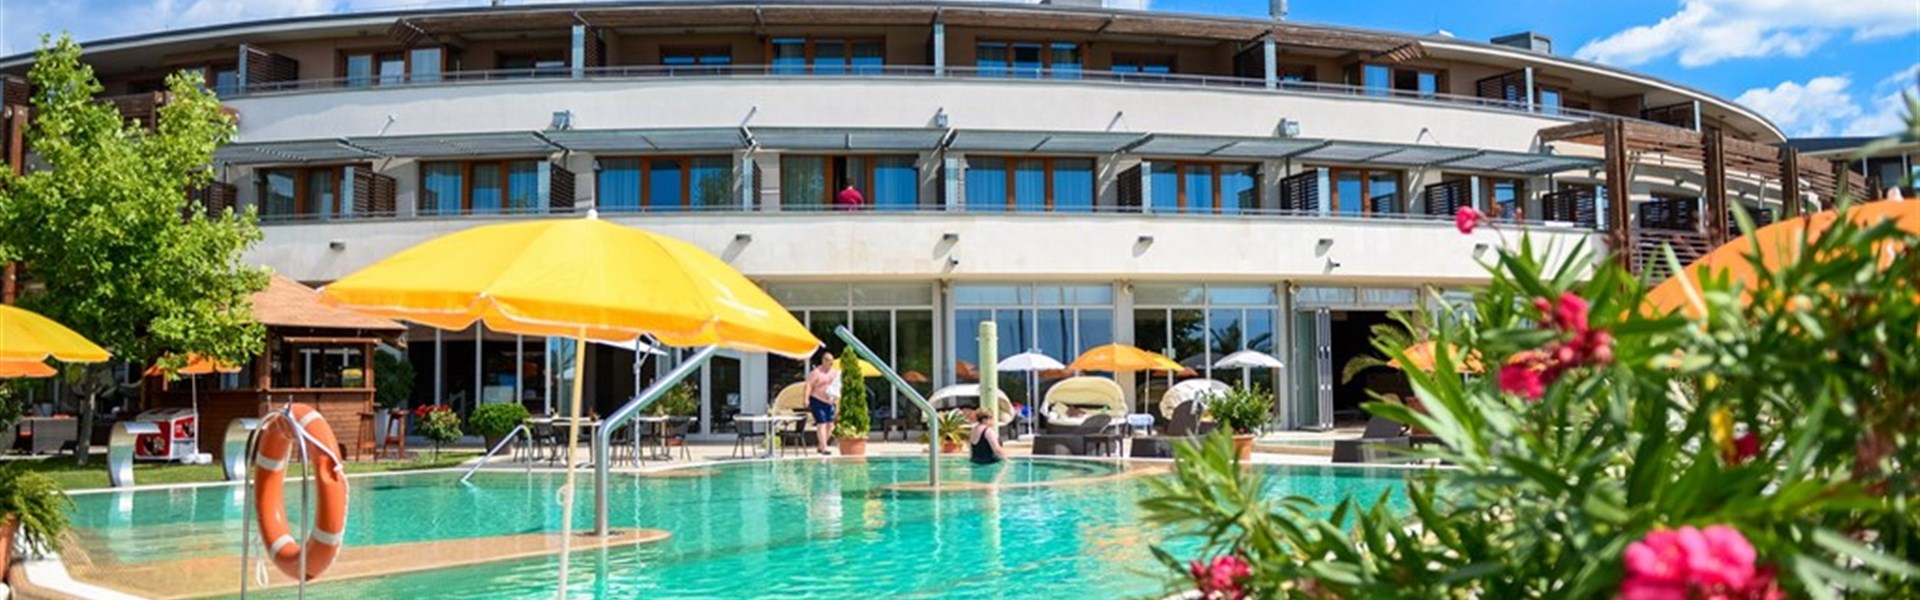 Marco Polo - Hotel Silverine Lake Resort - 